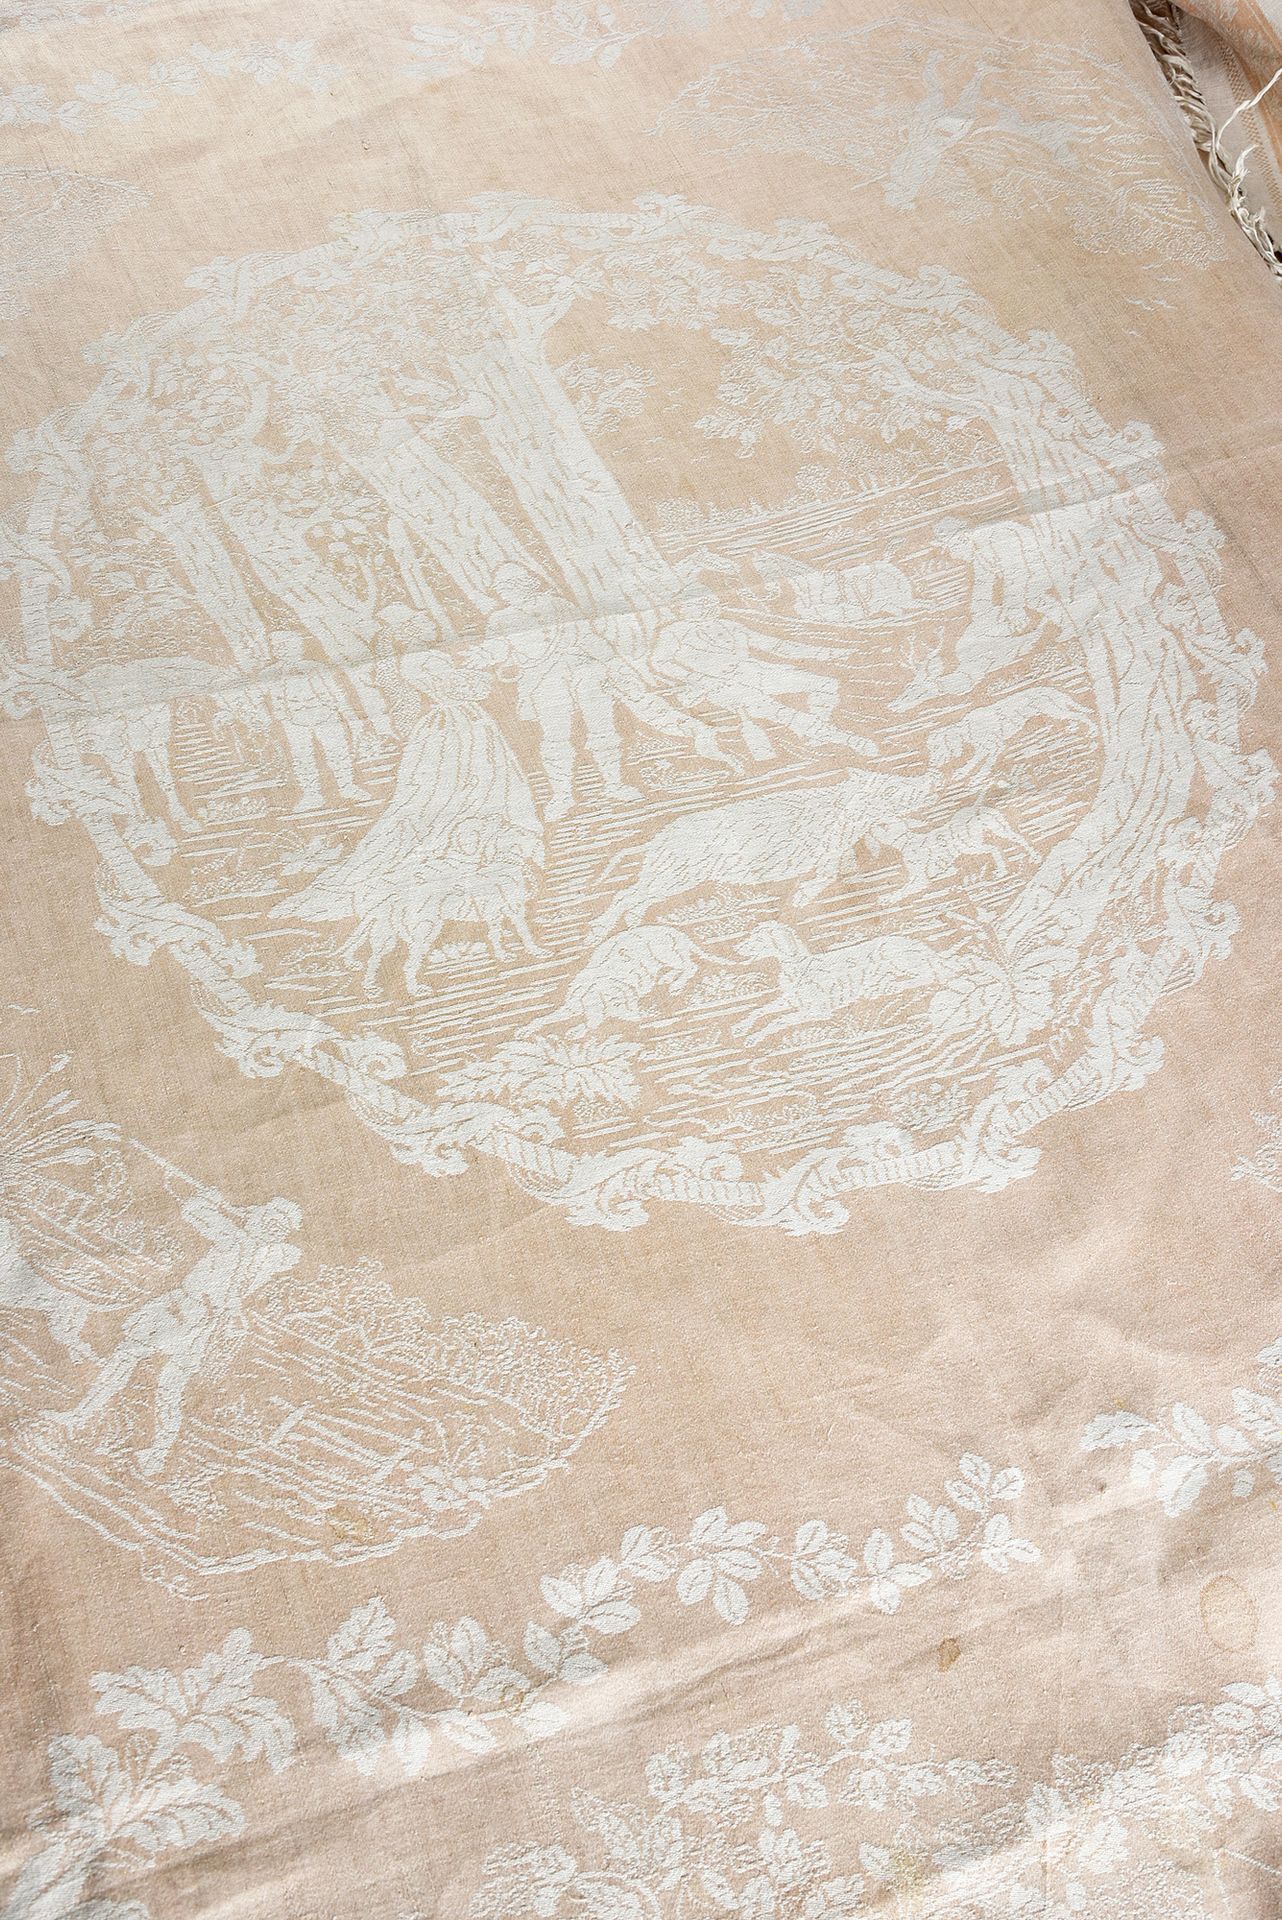 Null 象牙色和栗色双色冰晶大马士革的桌毯，装饰着森林中的骑士和鹿。(状况良好，有少量污损痕迹)
Dim : 170 x 170 cm